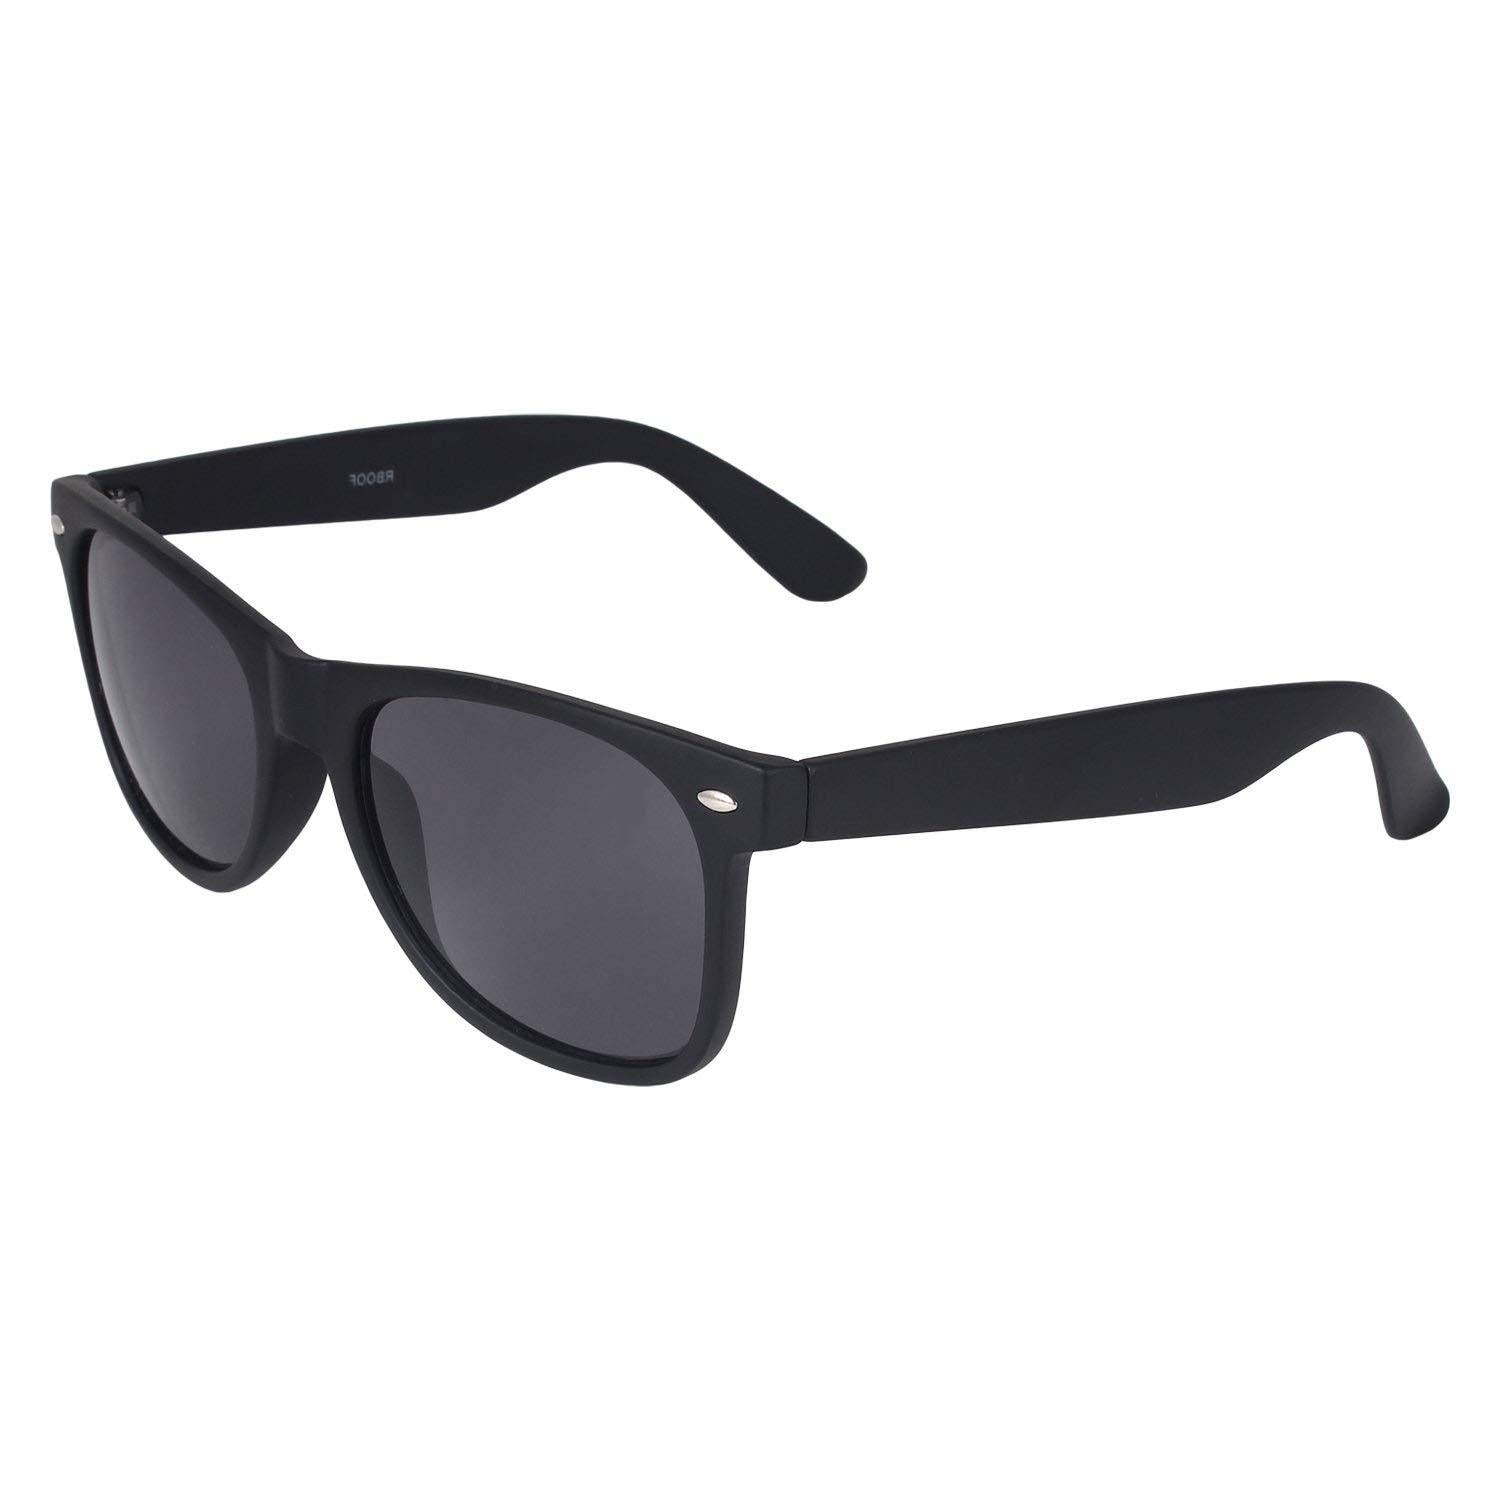 Lorenz Combo of Black Sunglasses, Black Men's Watch & Black Wallet- CM-1066SN-WL-19 - Lorenz Fashion